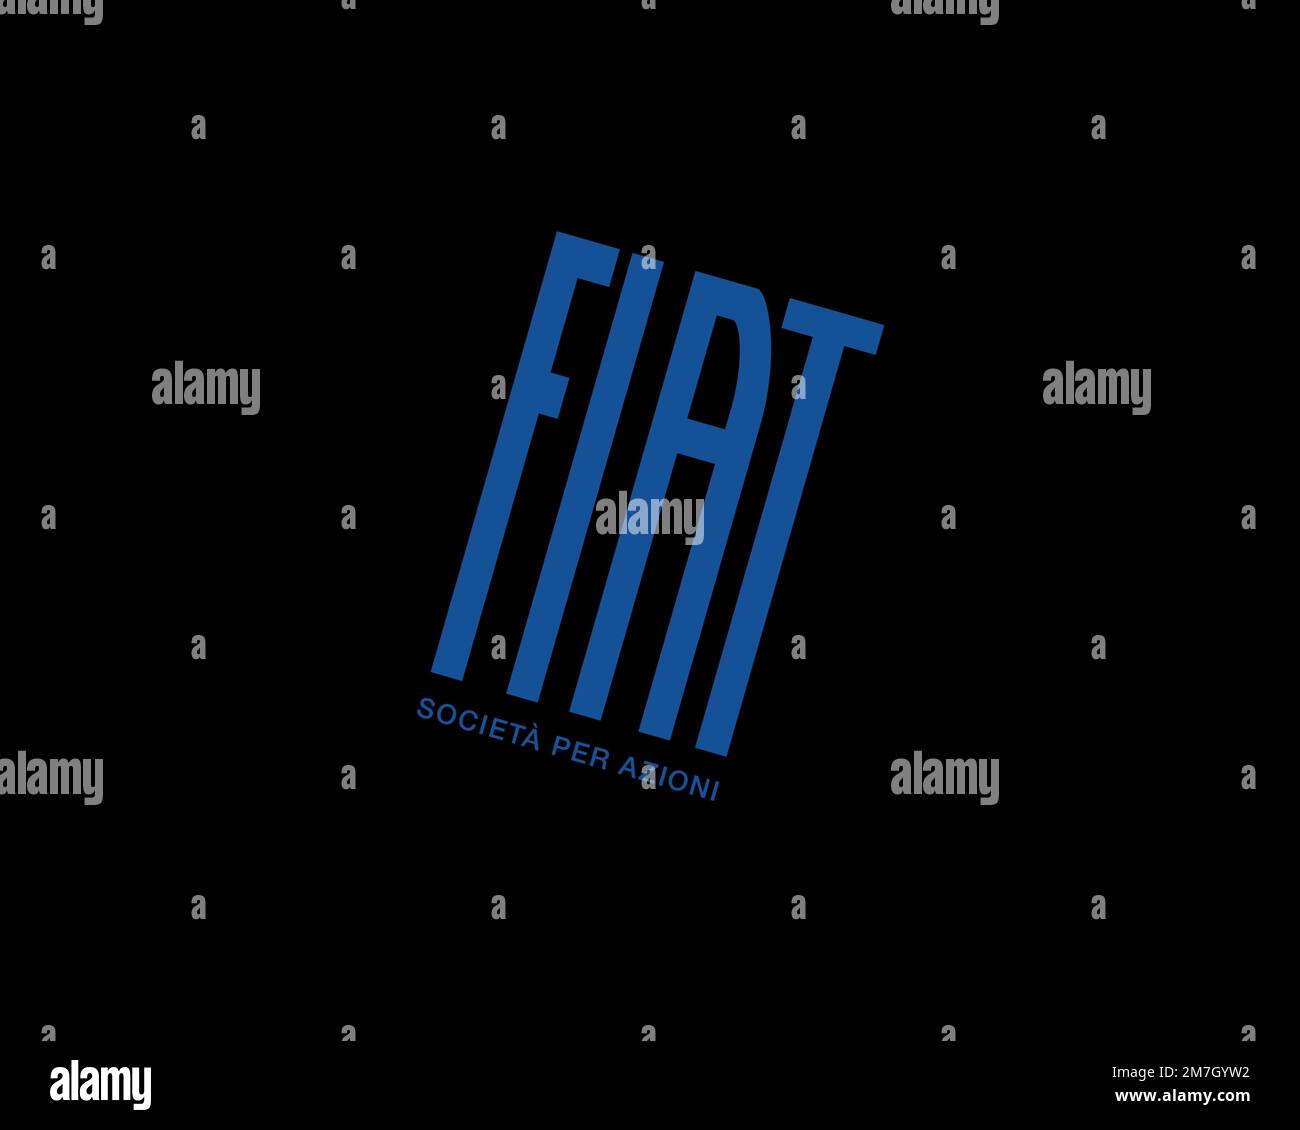 Fiat S. p. A. rotated logo, black background B Stock Photo - Alamy